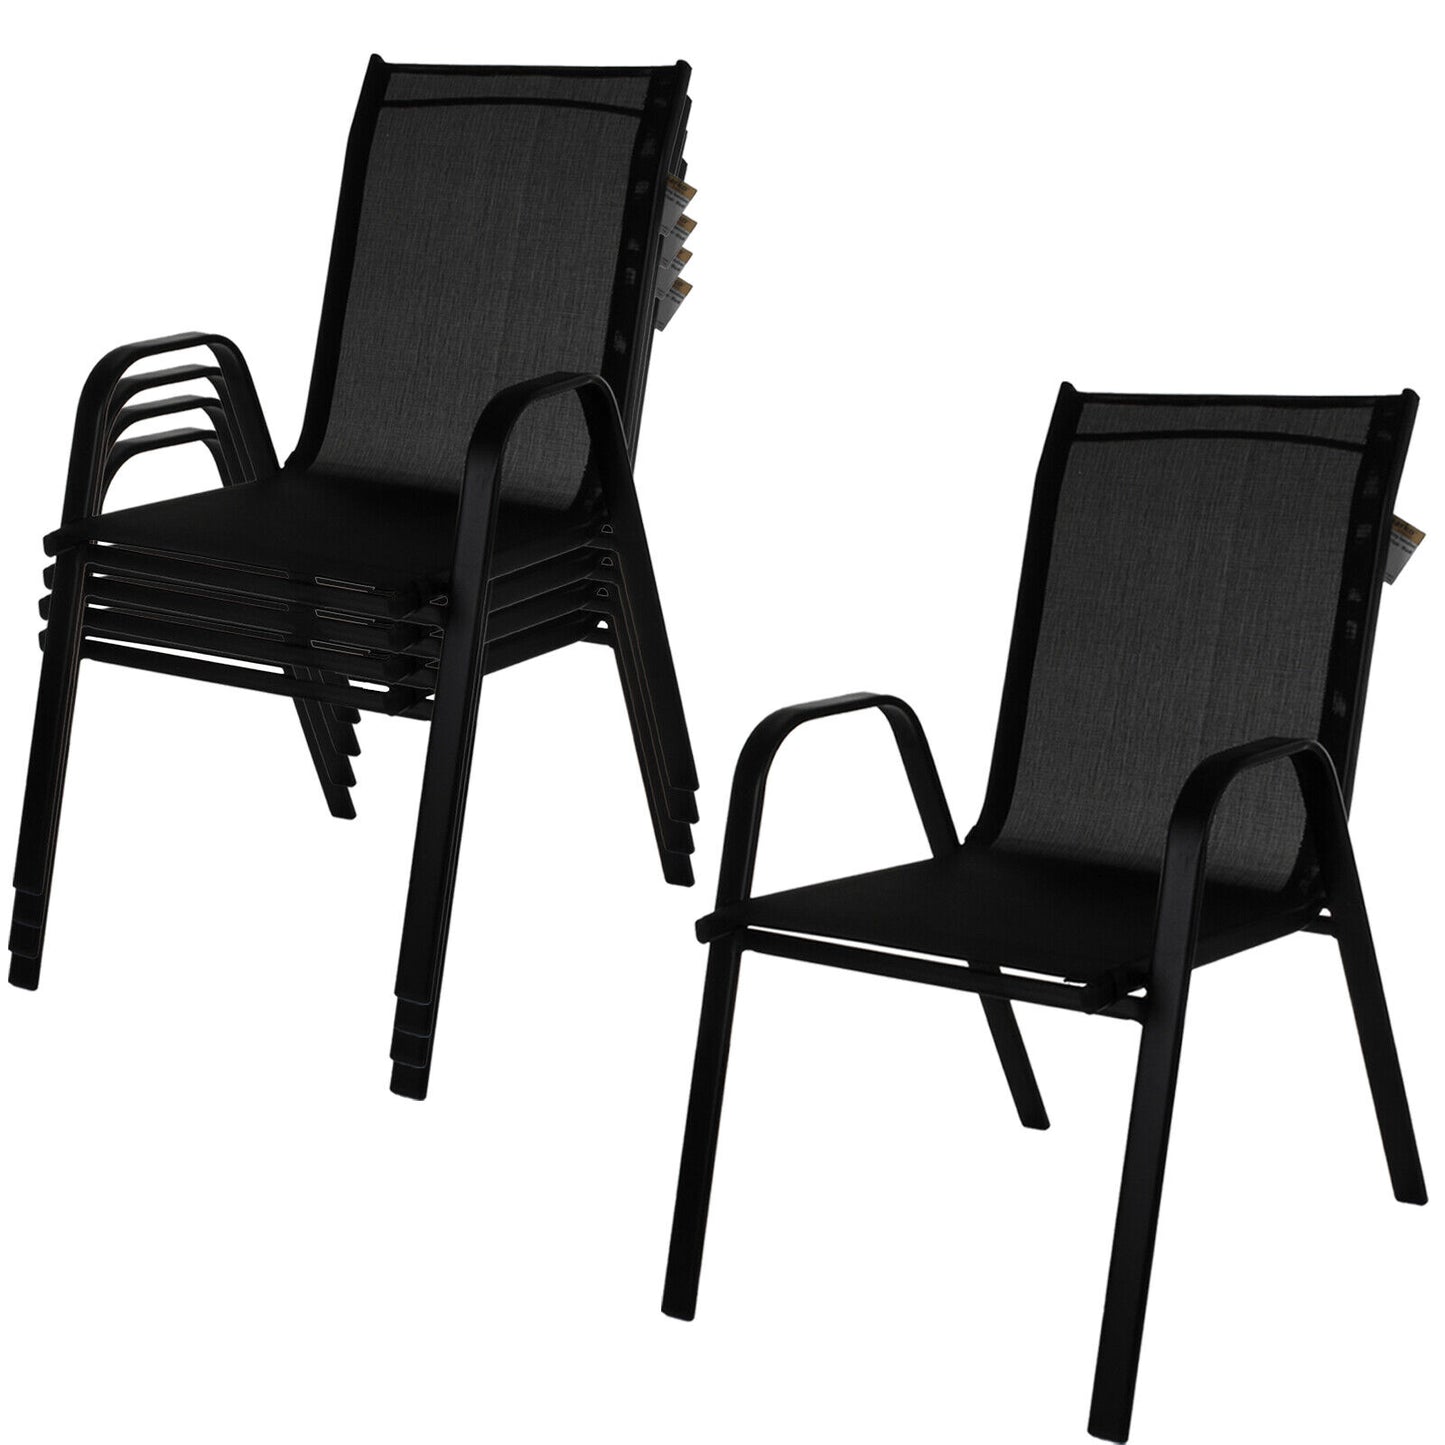 5PC Black Textoline Chairs with 60cm Black Wicker Edge Round Bistro Table